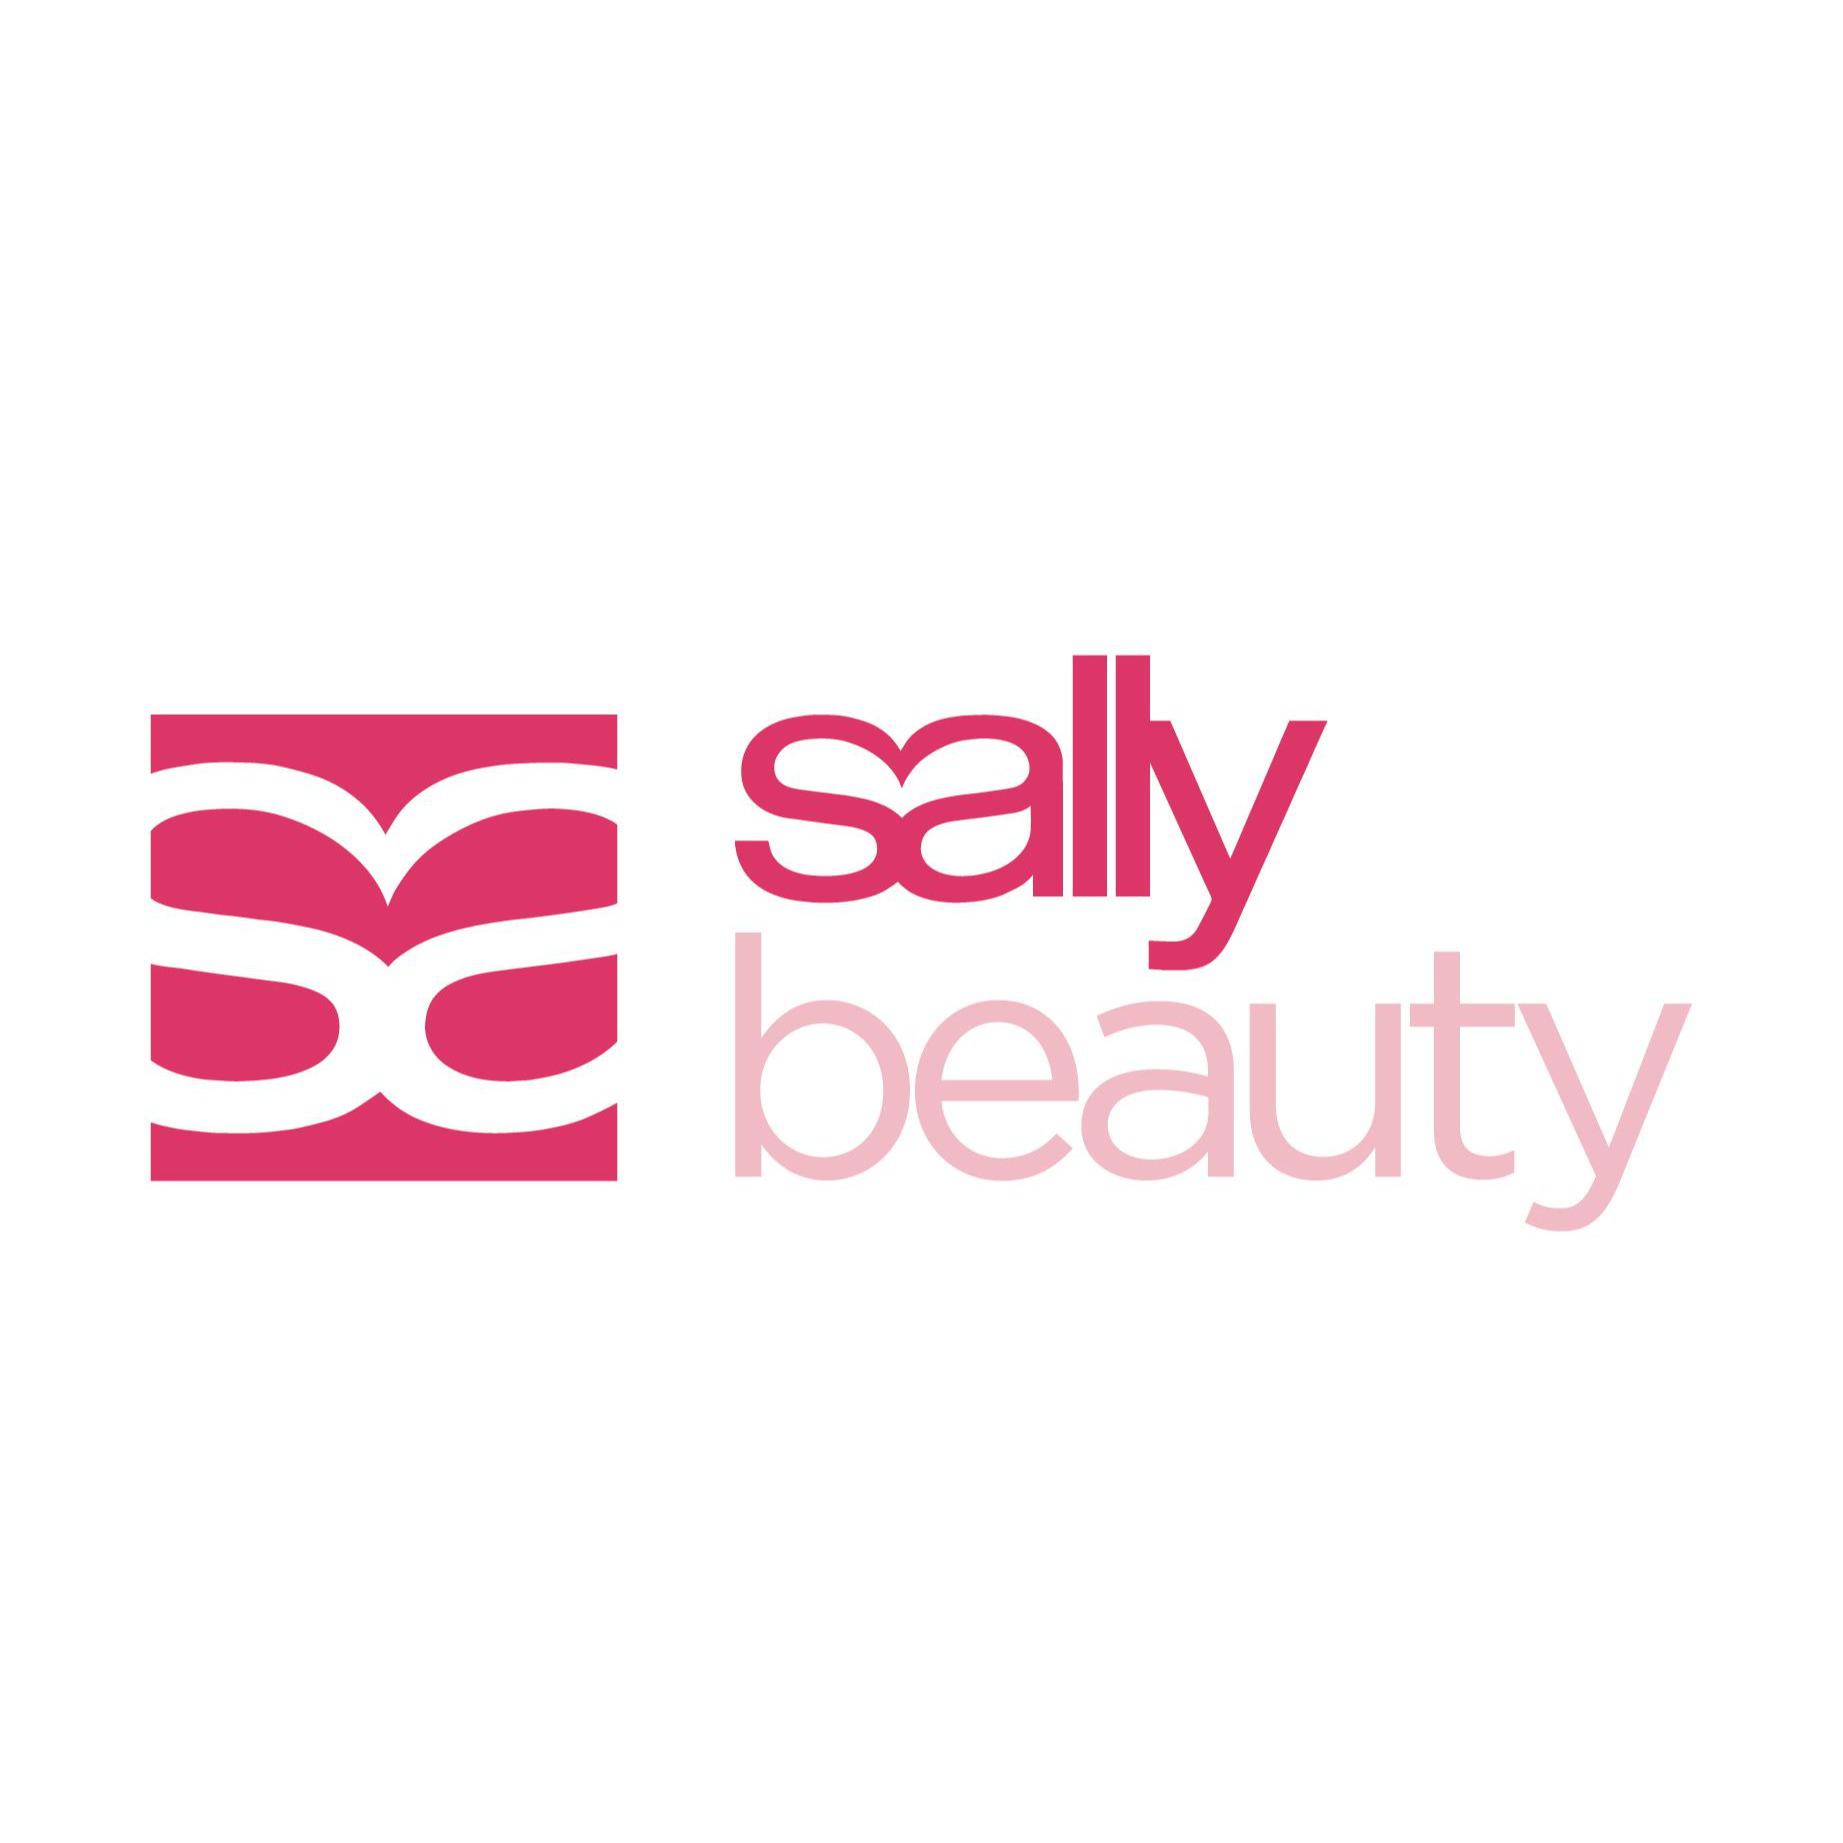 Sally Beauty - Hemel Hempstead, Hertfordshire HP3 9HD - 01442 243400 | ShowMeLocal.com